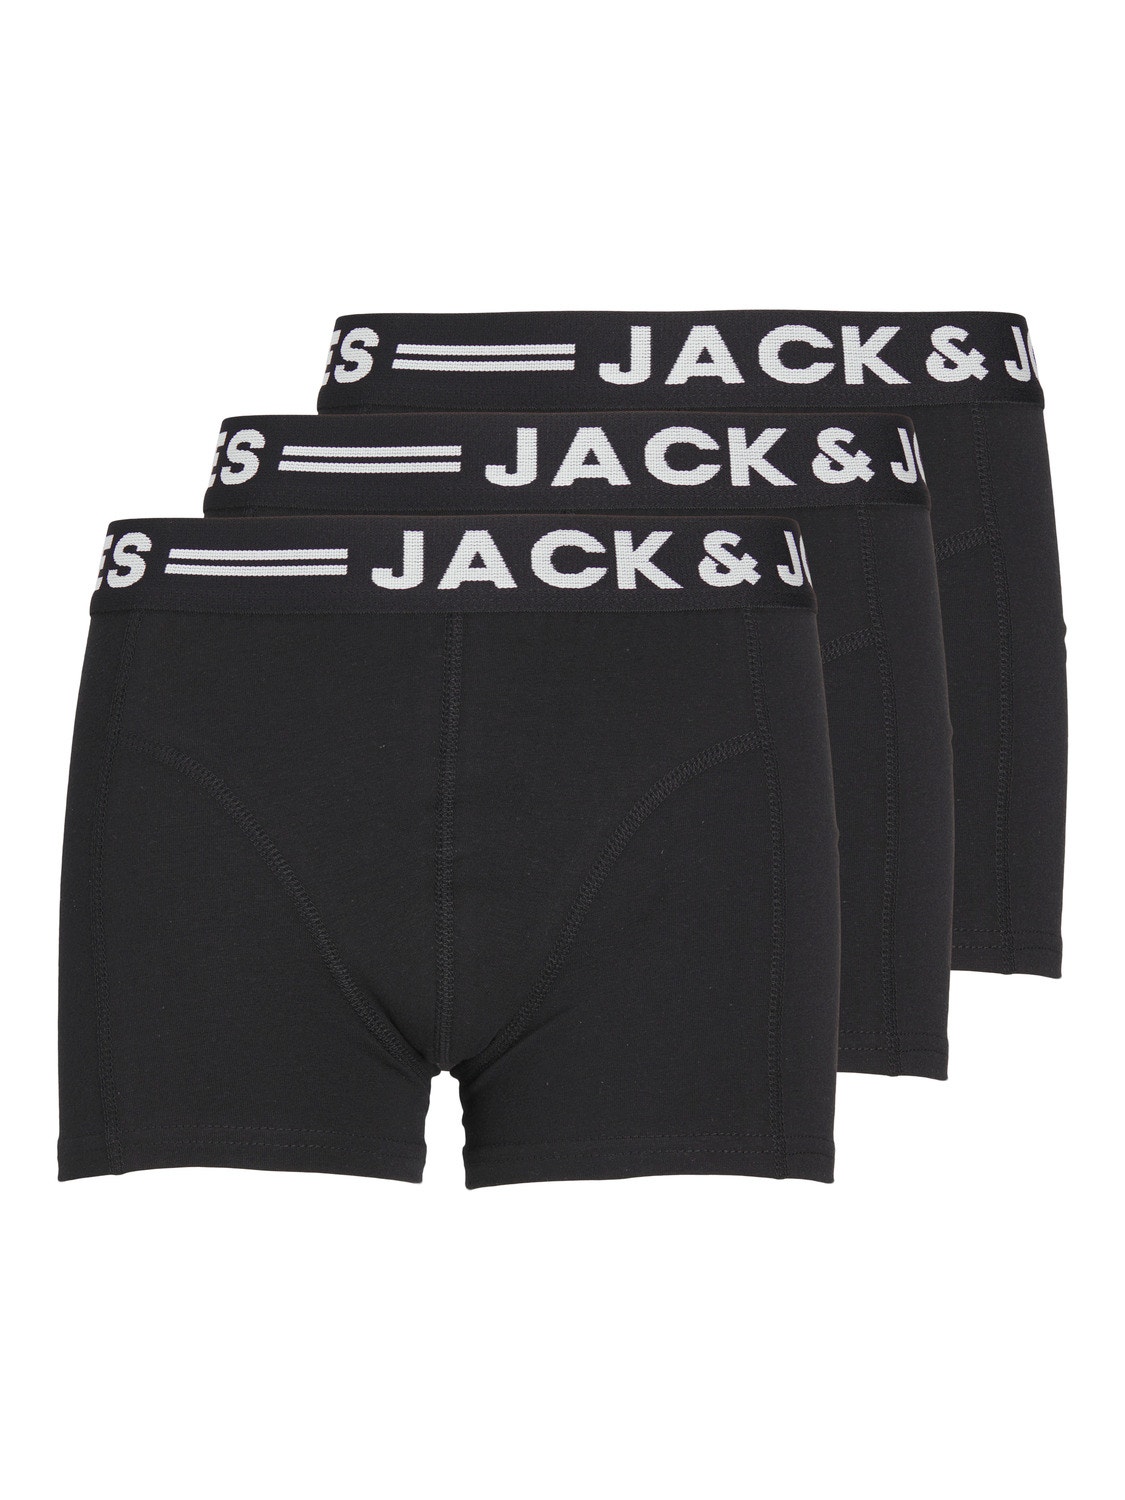 Jack & Jones Pack de 3 Boxers Mini -Black - 12256698